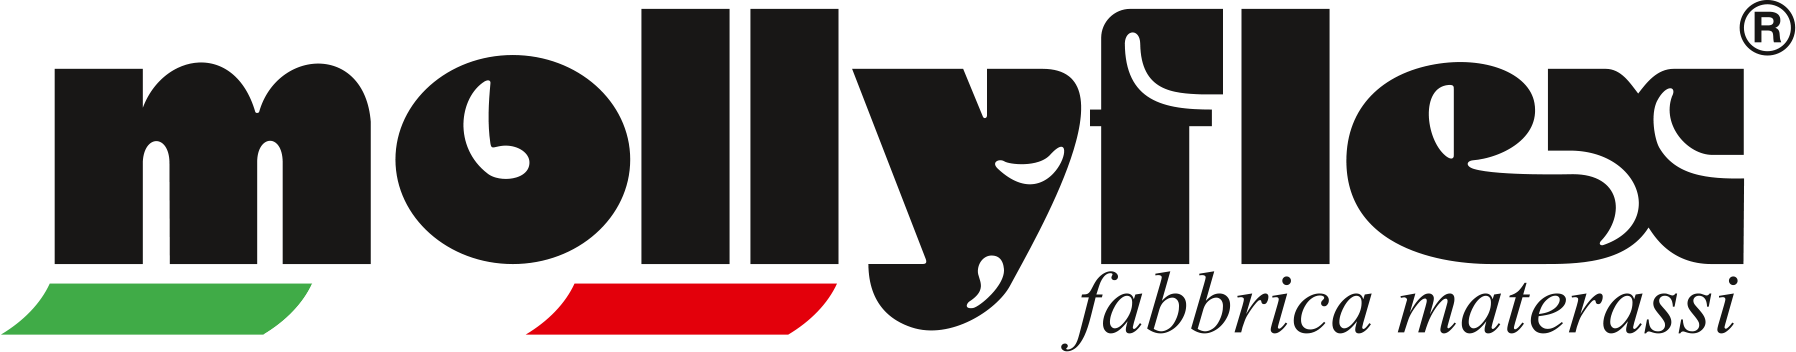 mollyflex logo.jpg